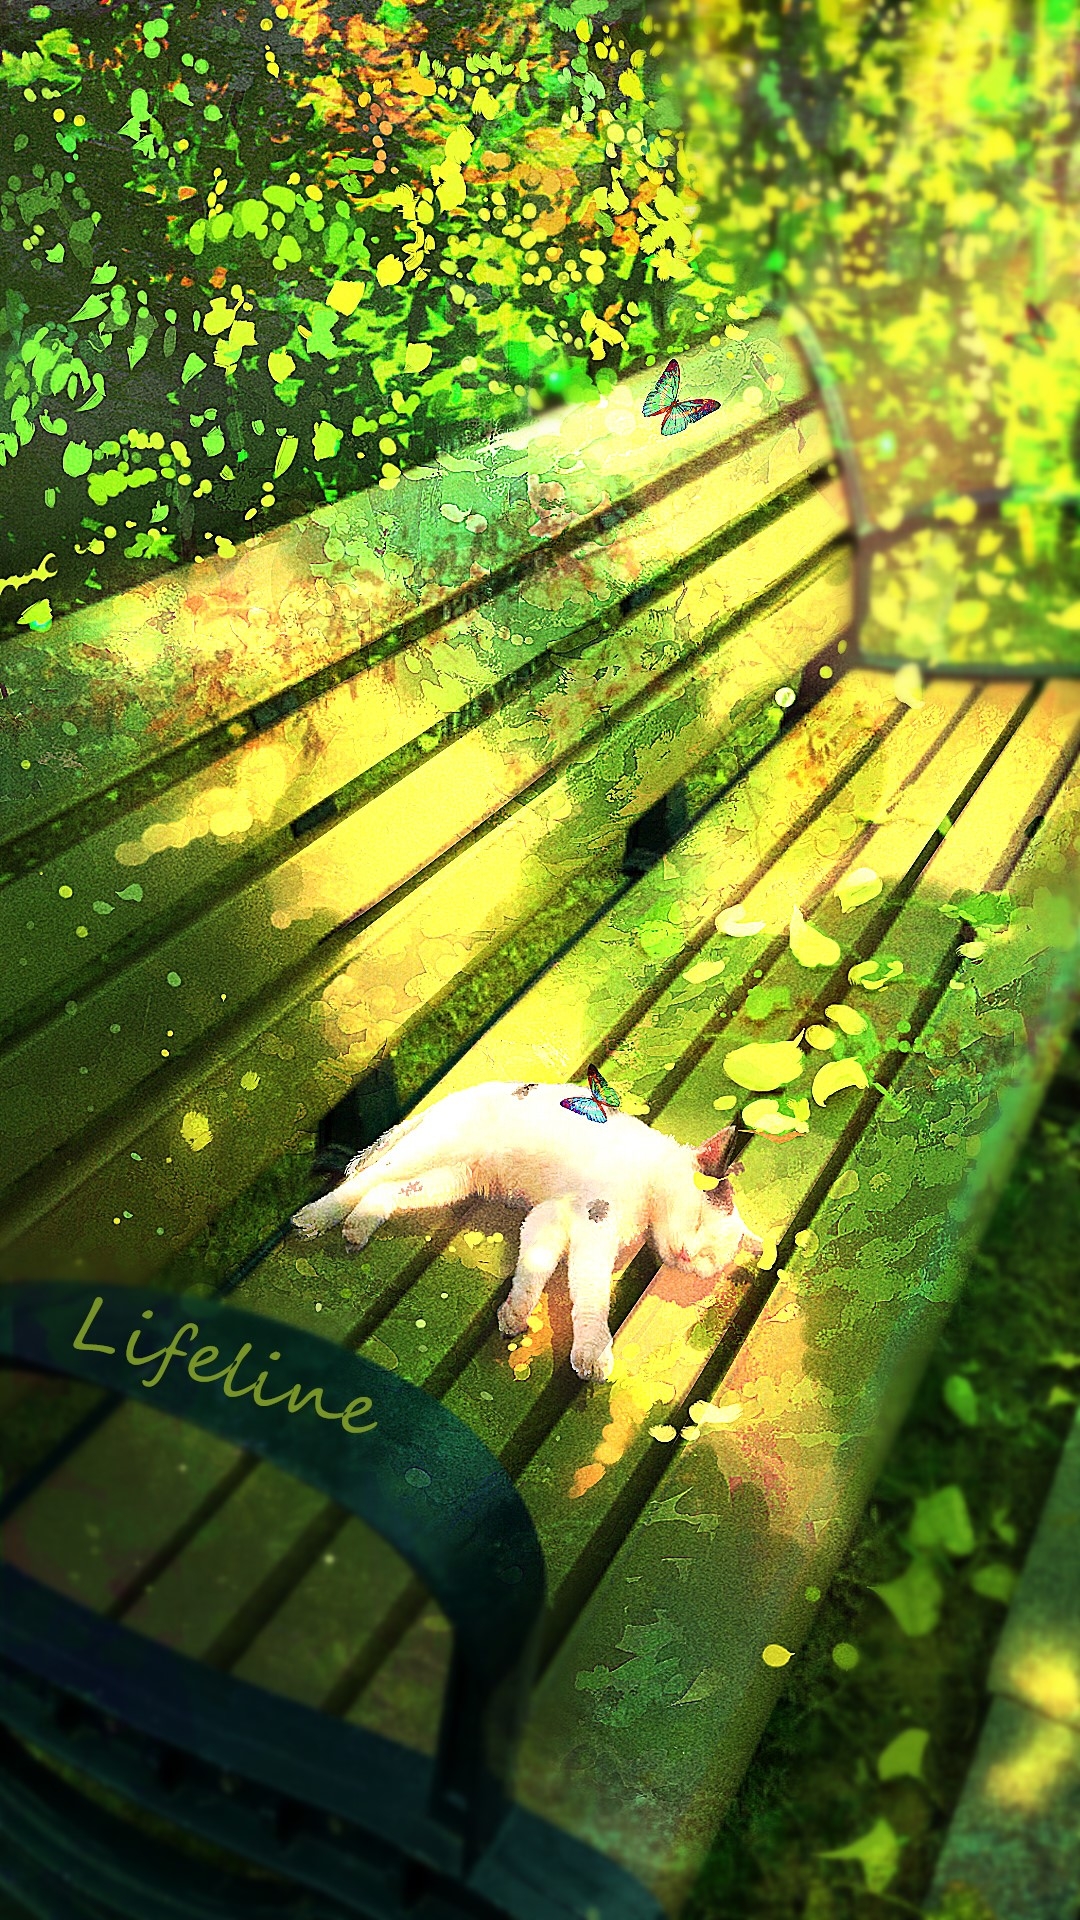 [Artist] Lifeline 188